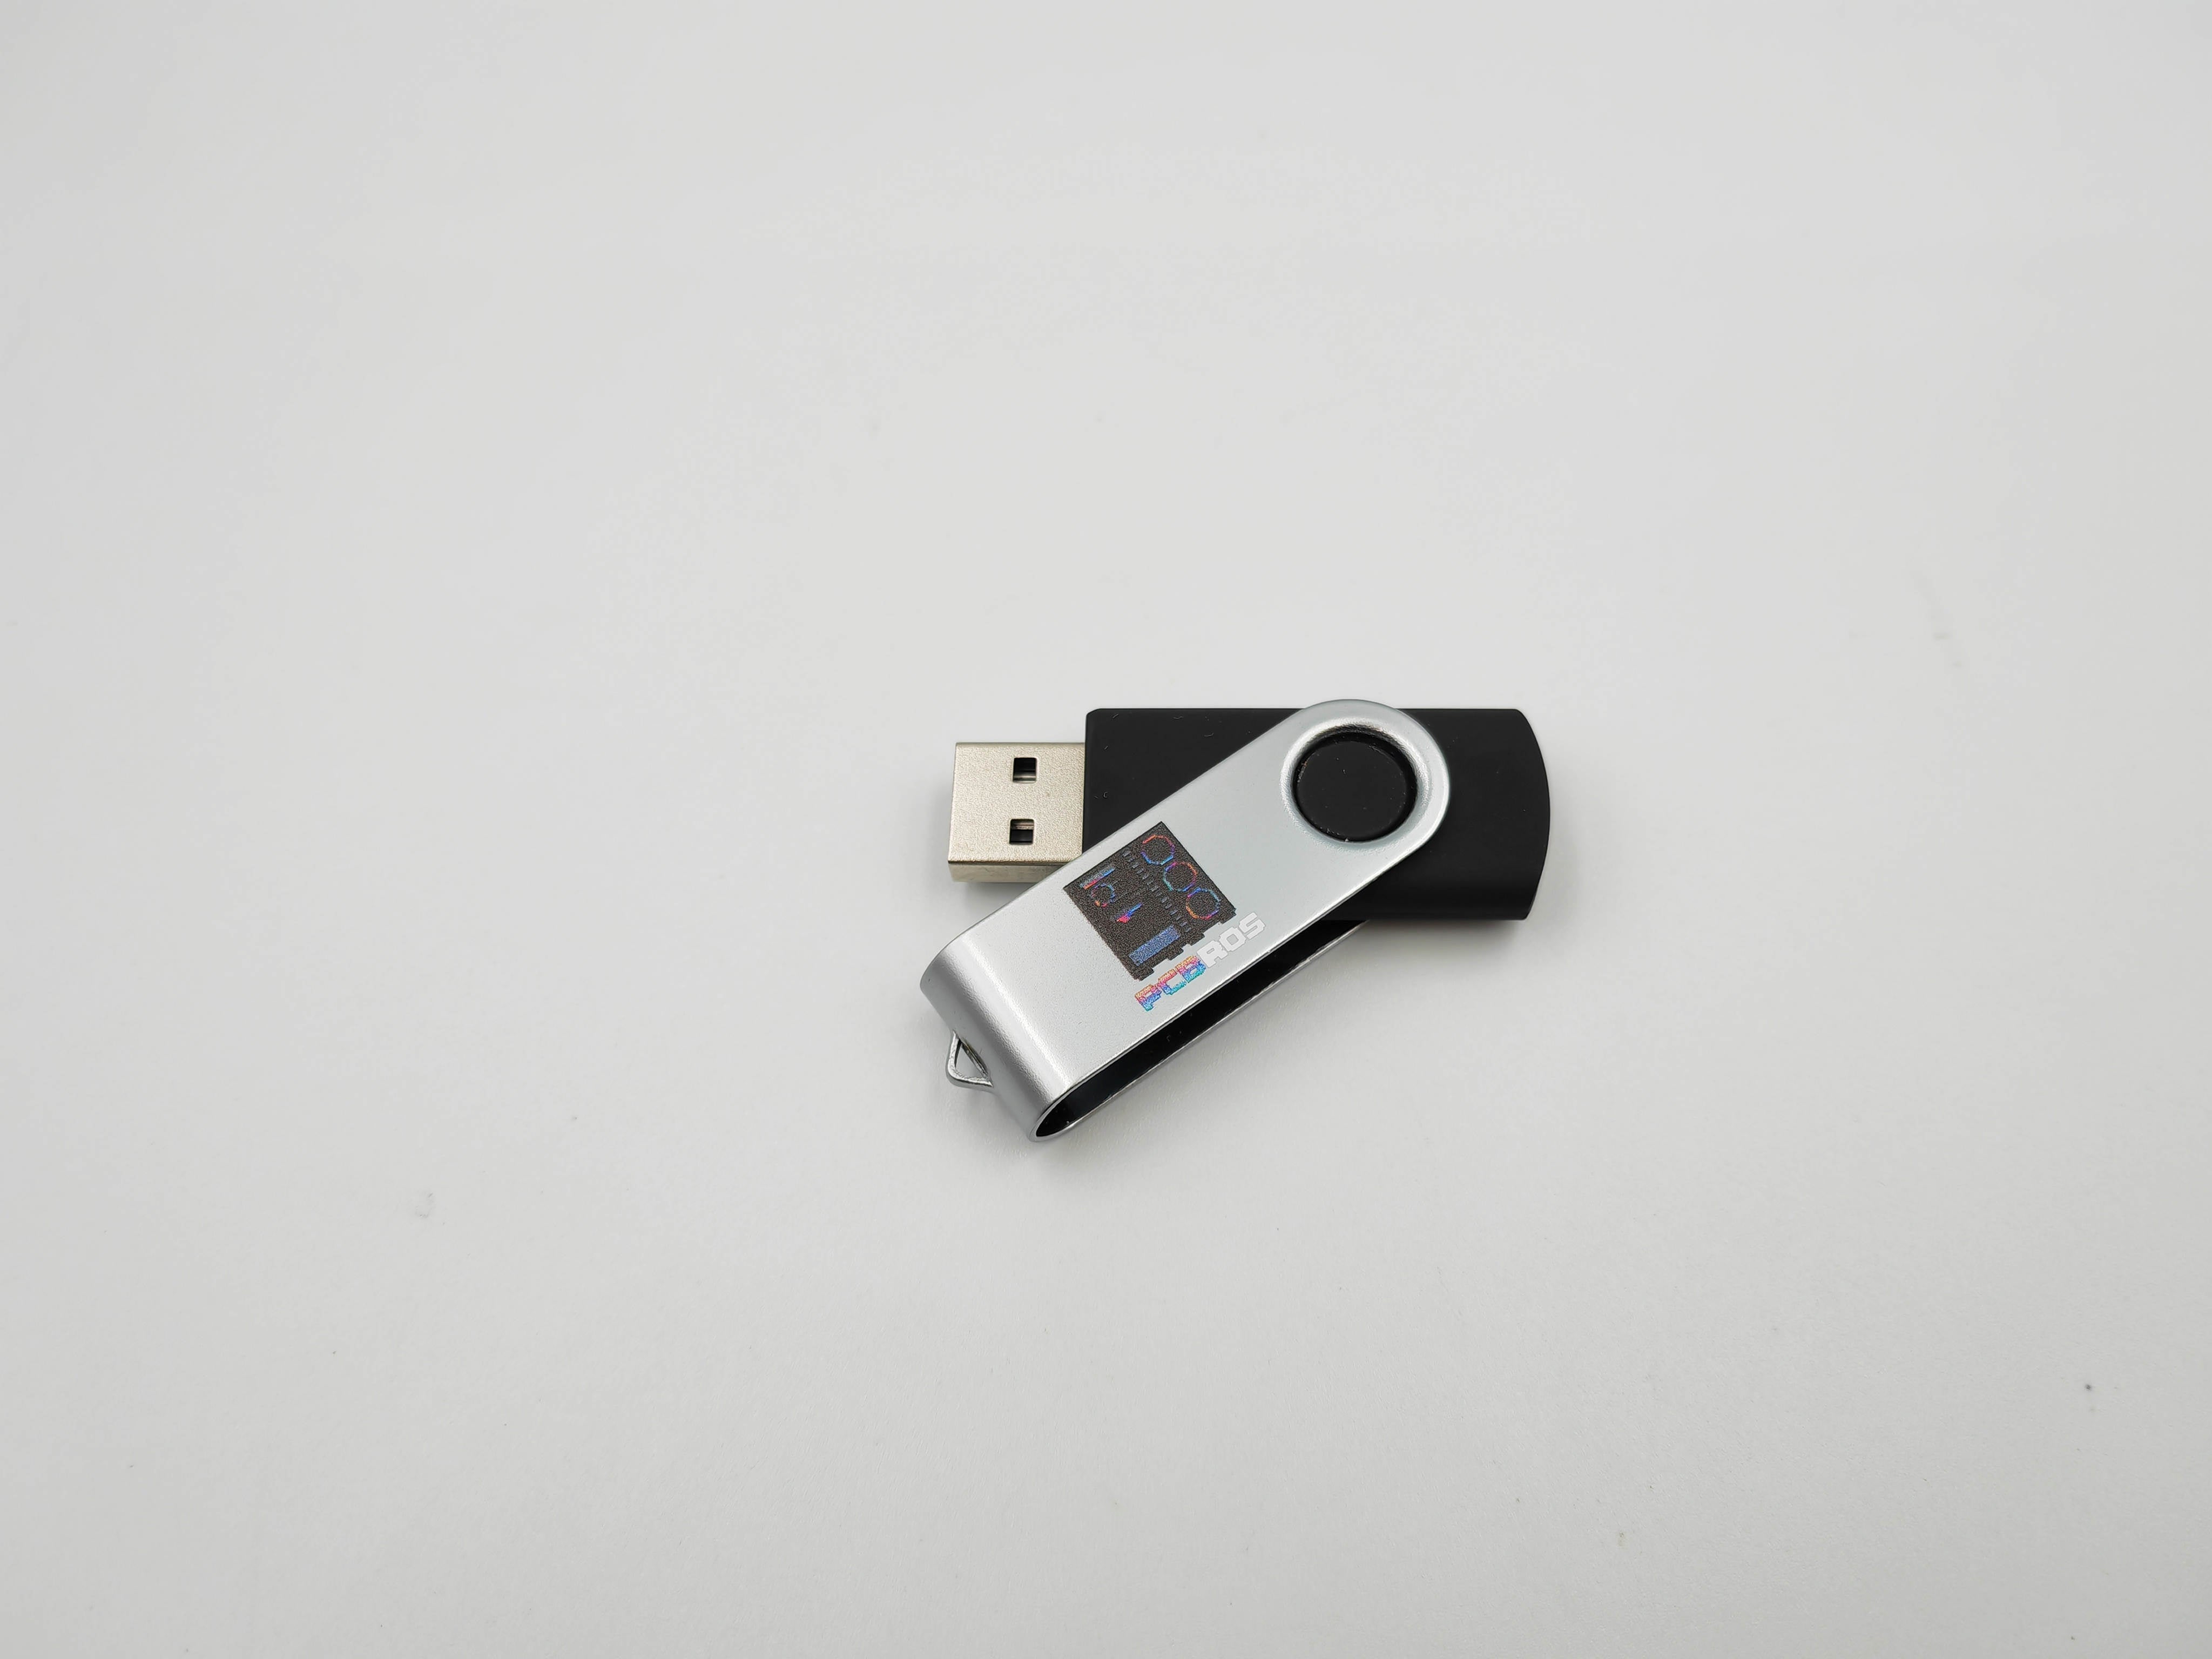 16GB USB 2.0 PCBros Flash Drive